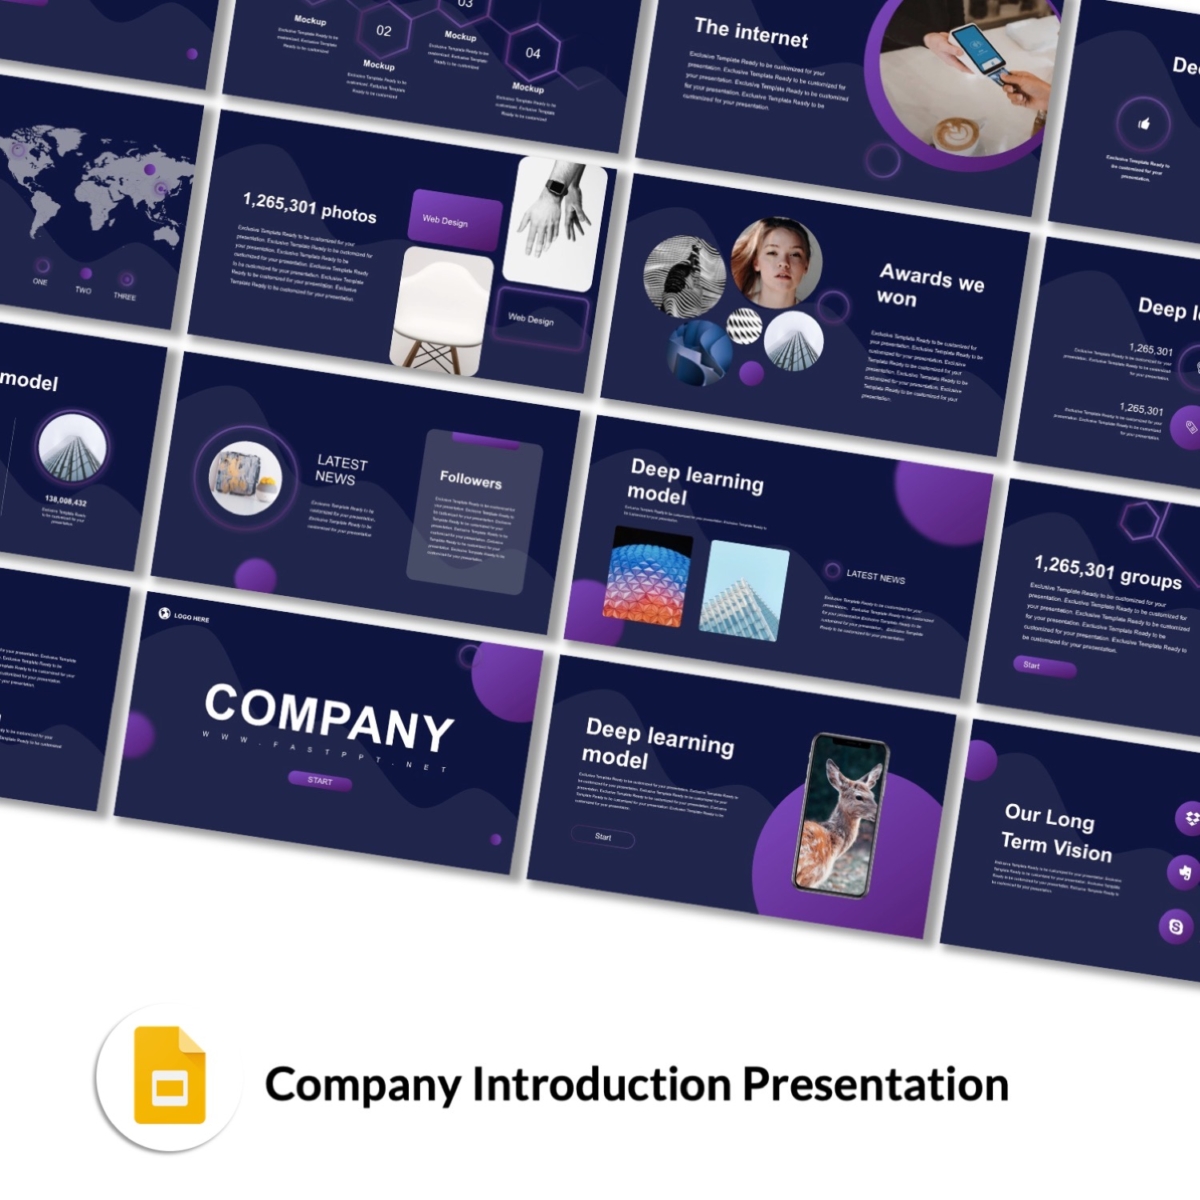 Google Slides-A Company Introduction Multipurpose Presentation Template